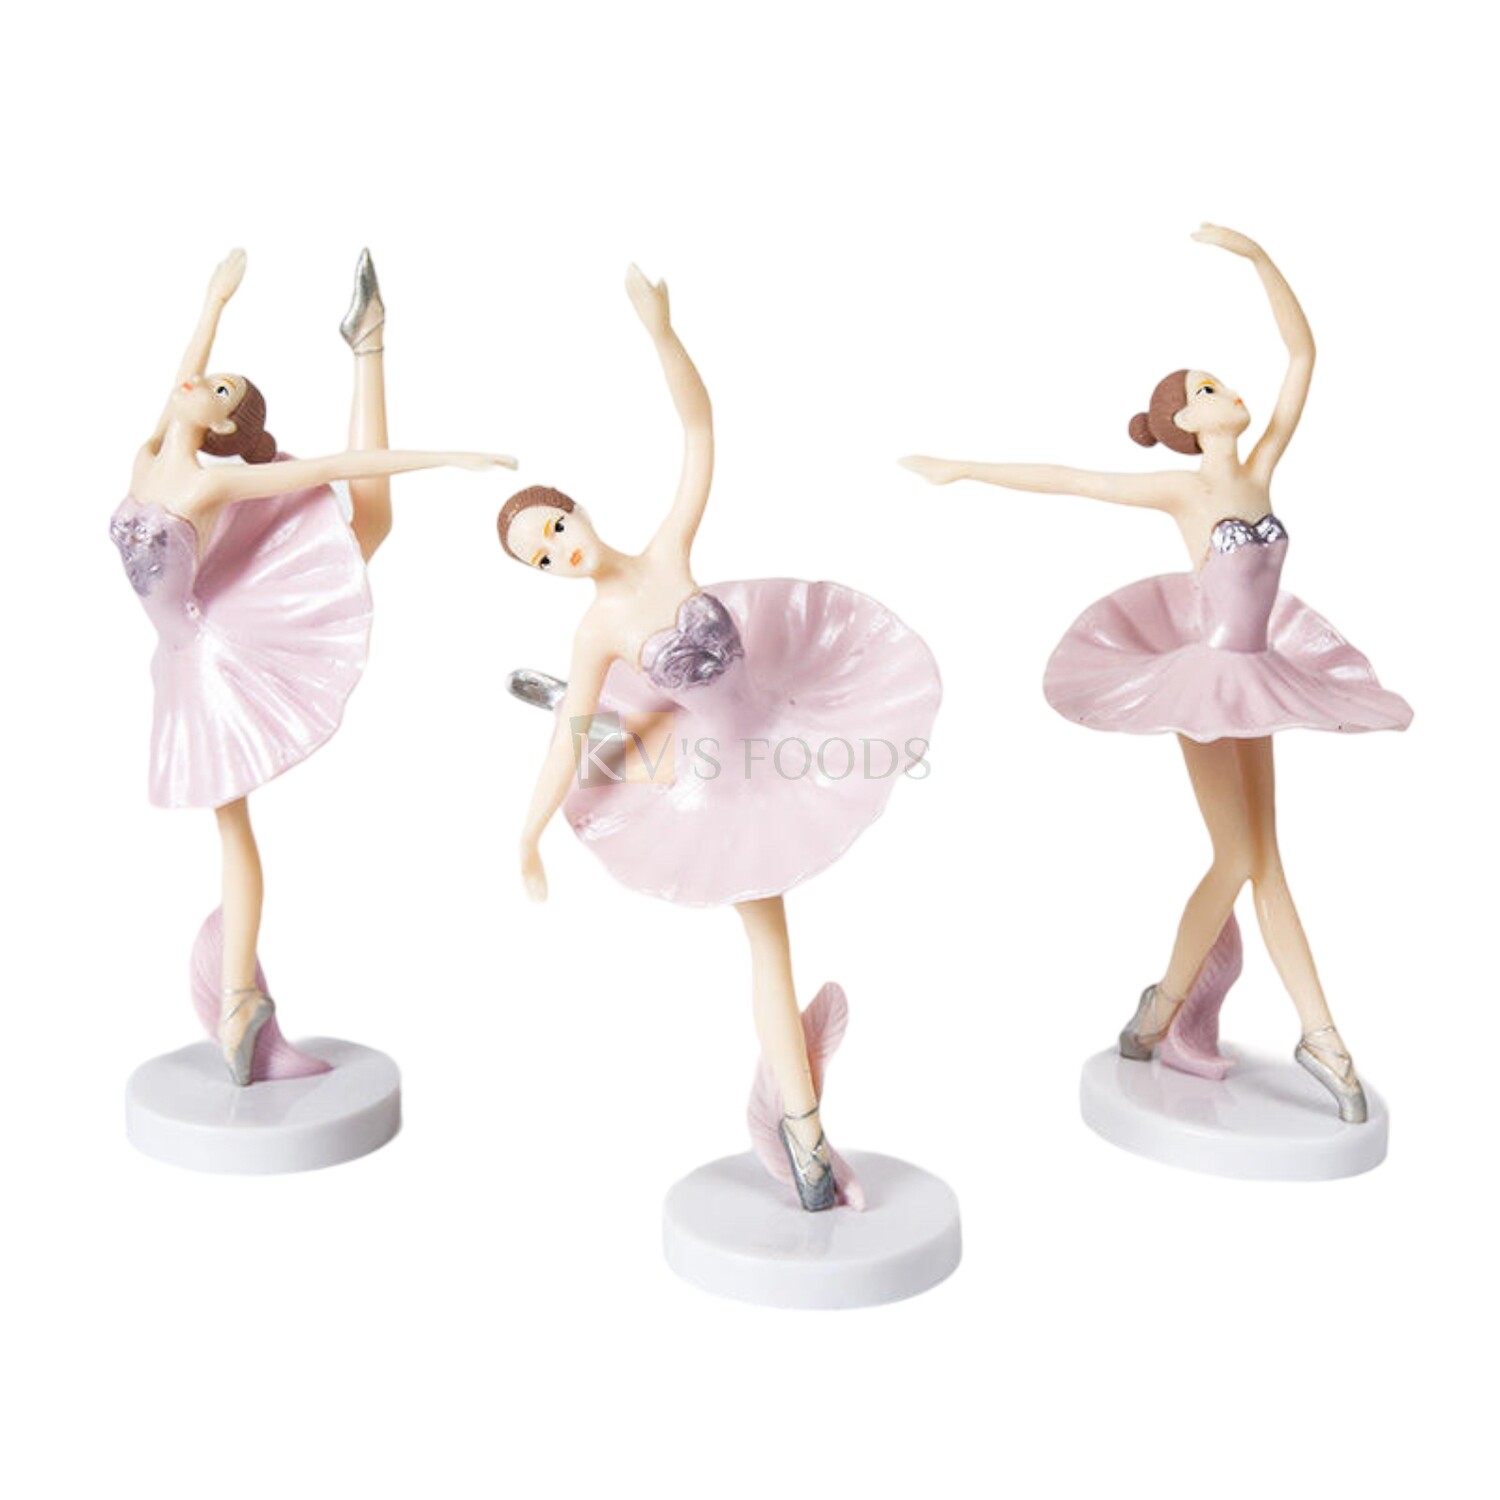 Buy 1PC or Set of 3 Pink Elegant Dancing Ballerina Ballet Dancers Themed Cake Toppers Set, Miniature Figurine, Cake Decoration, Mini Cake Toppers Action Figures Toys, Desktop Ornament